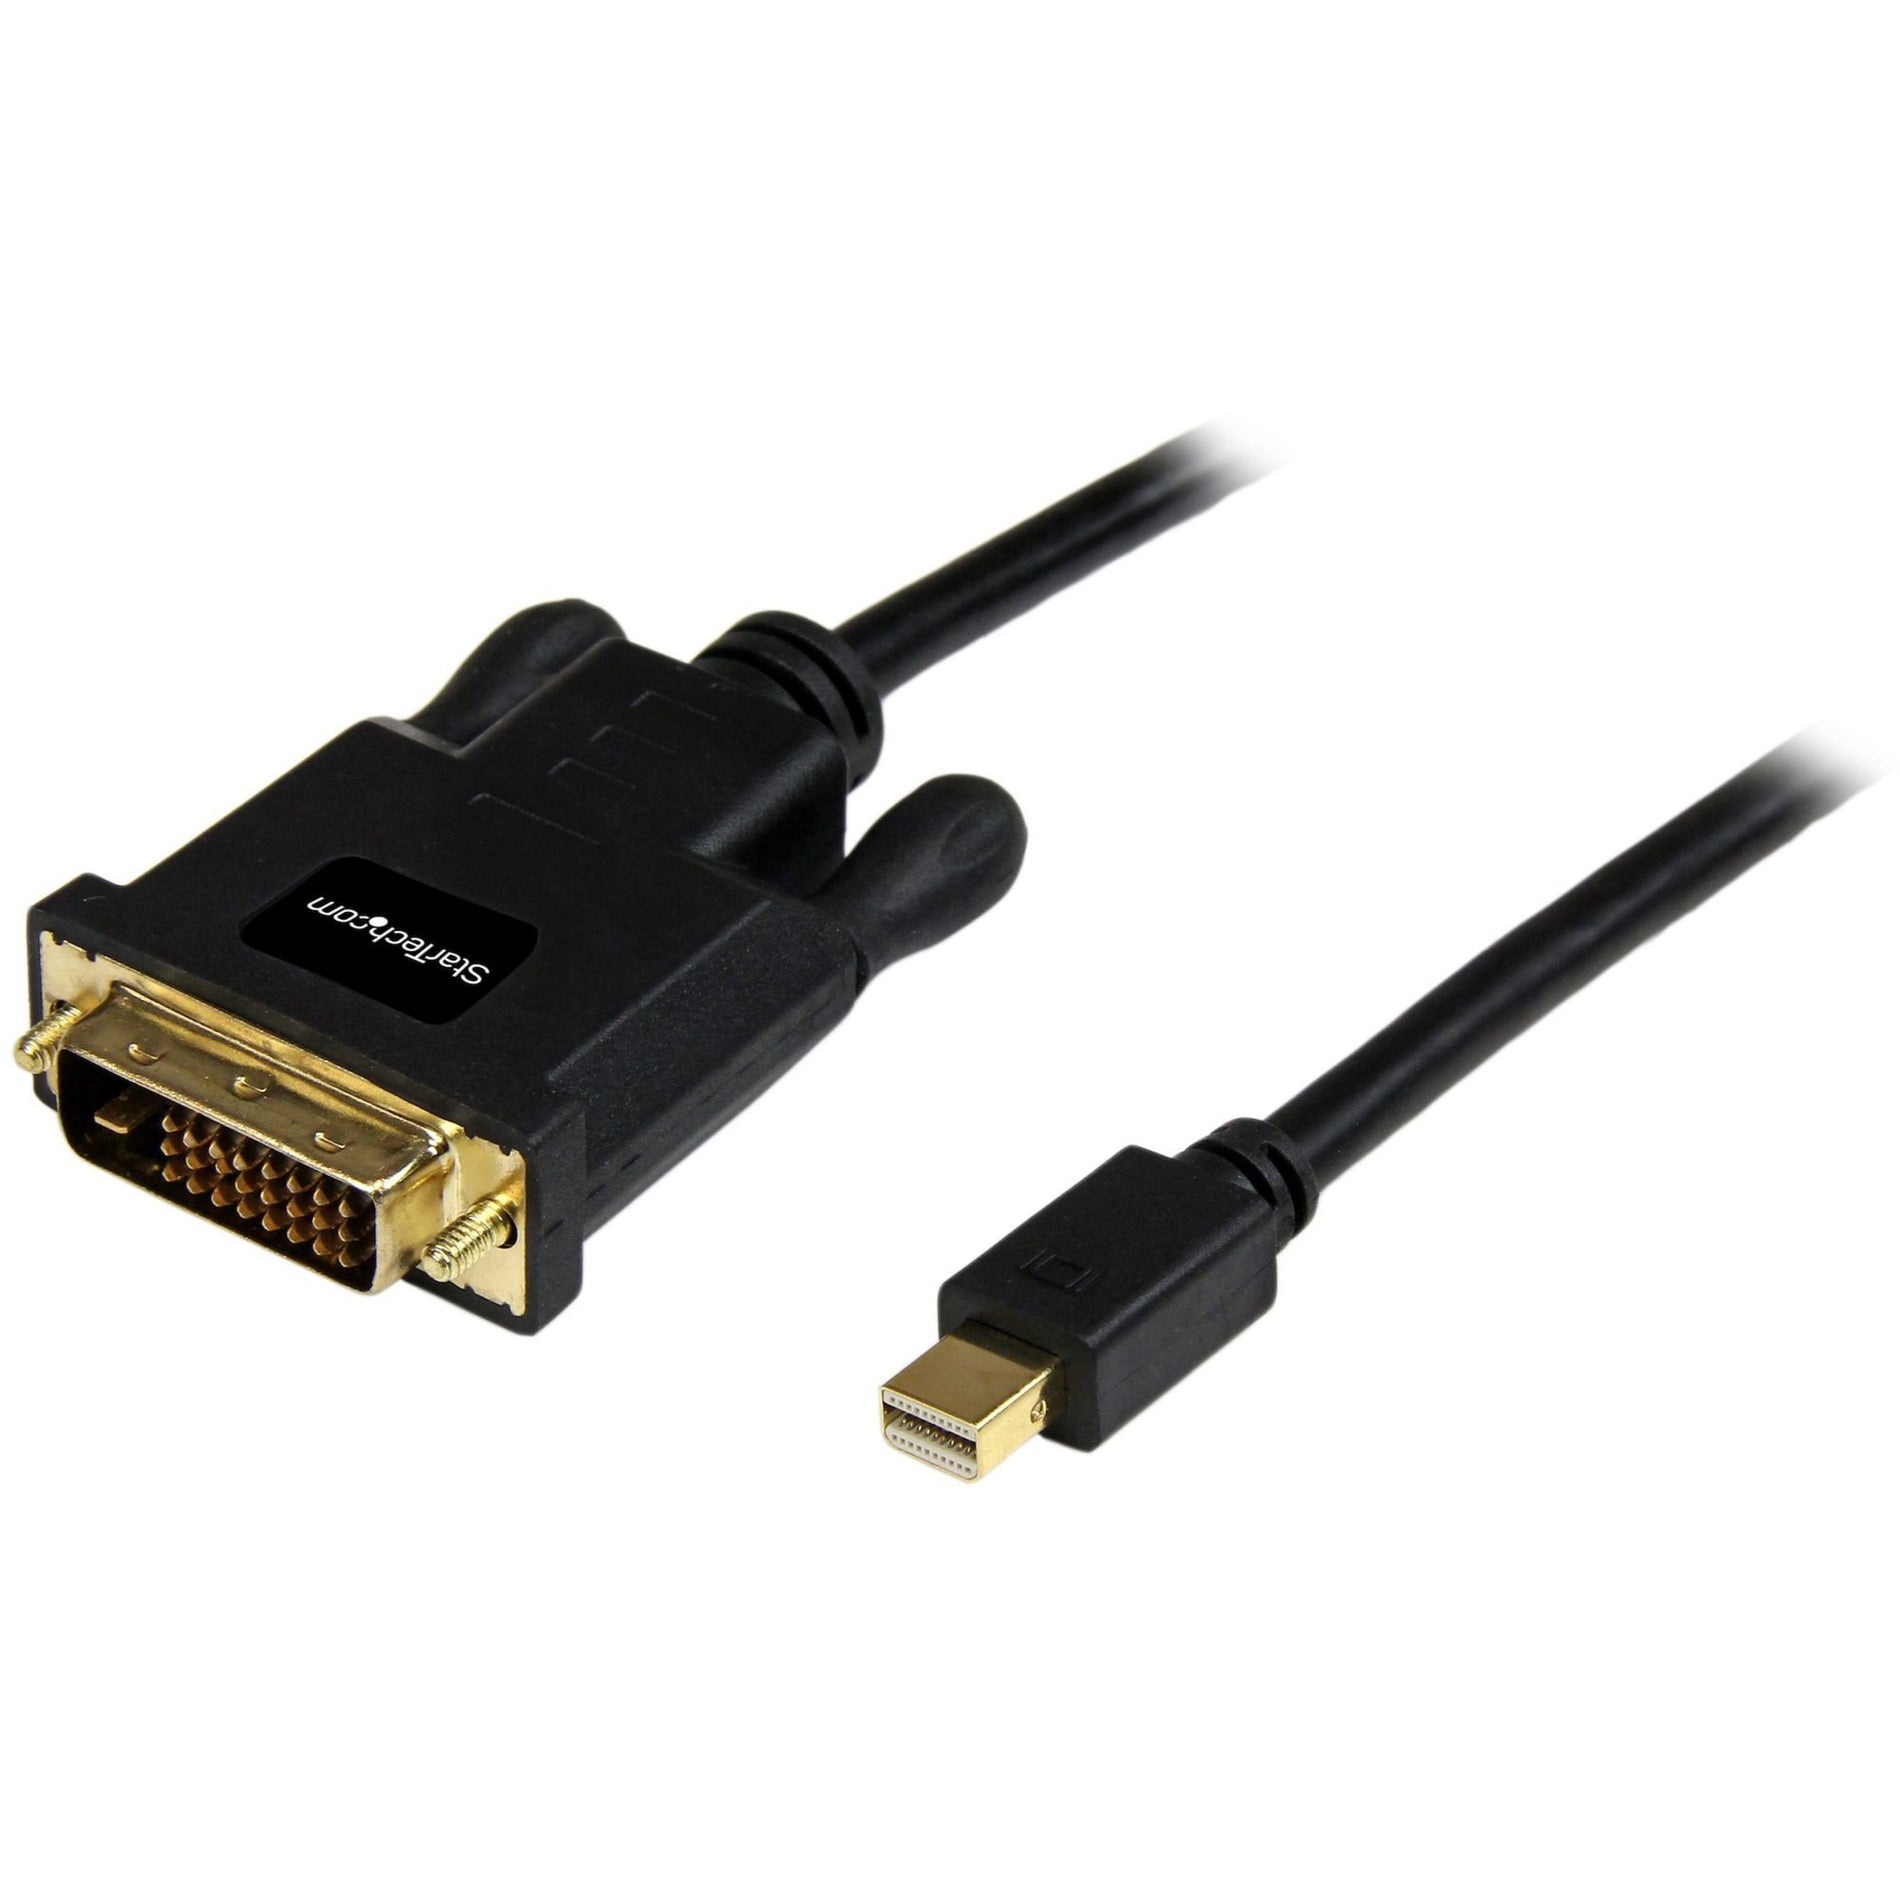 StarTech.com MDP2DVIMM3B Mini DisplayPort to DVI Adapter Converter Cable - Black, 3 ft, 1920x1200